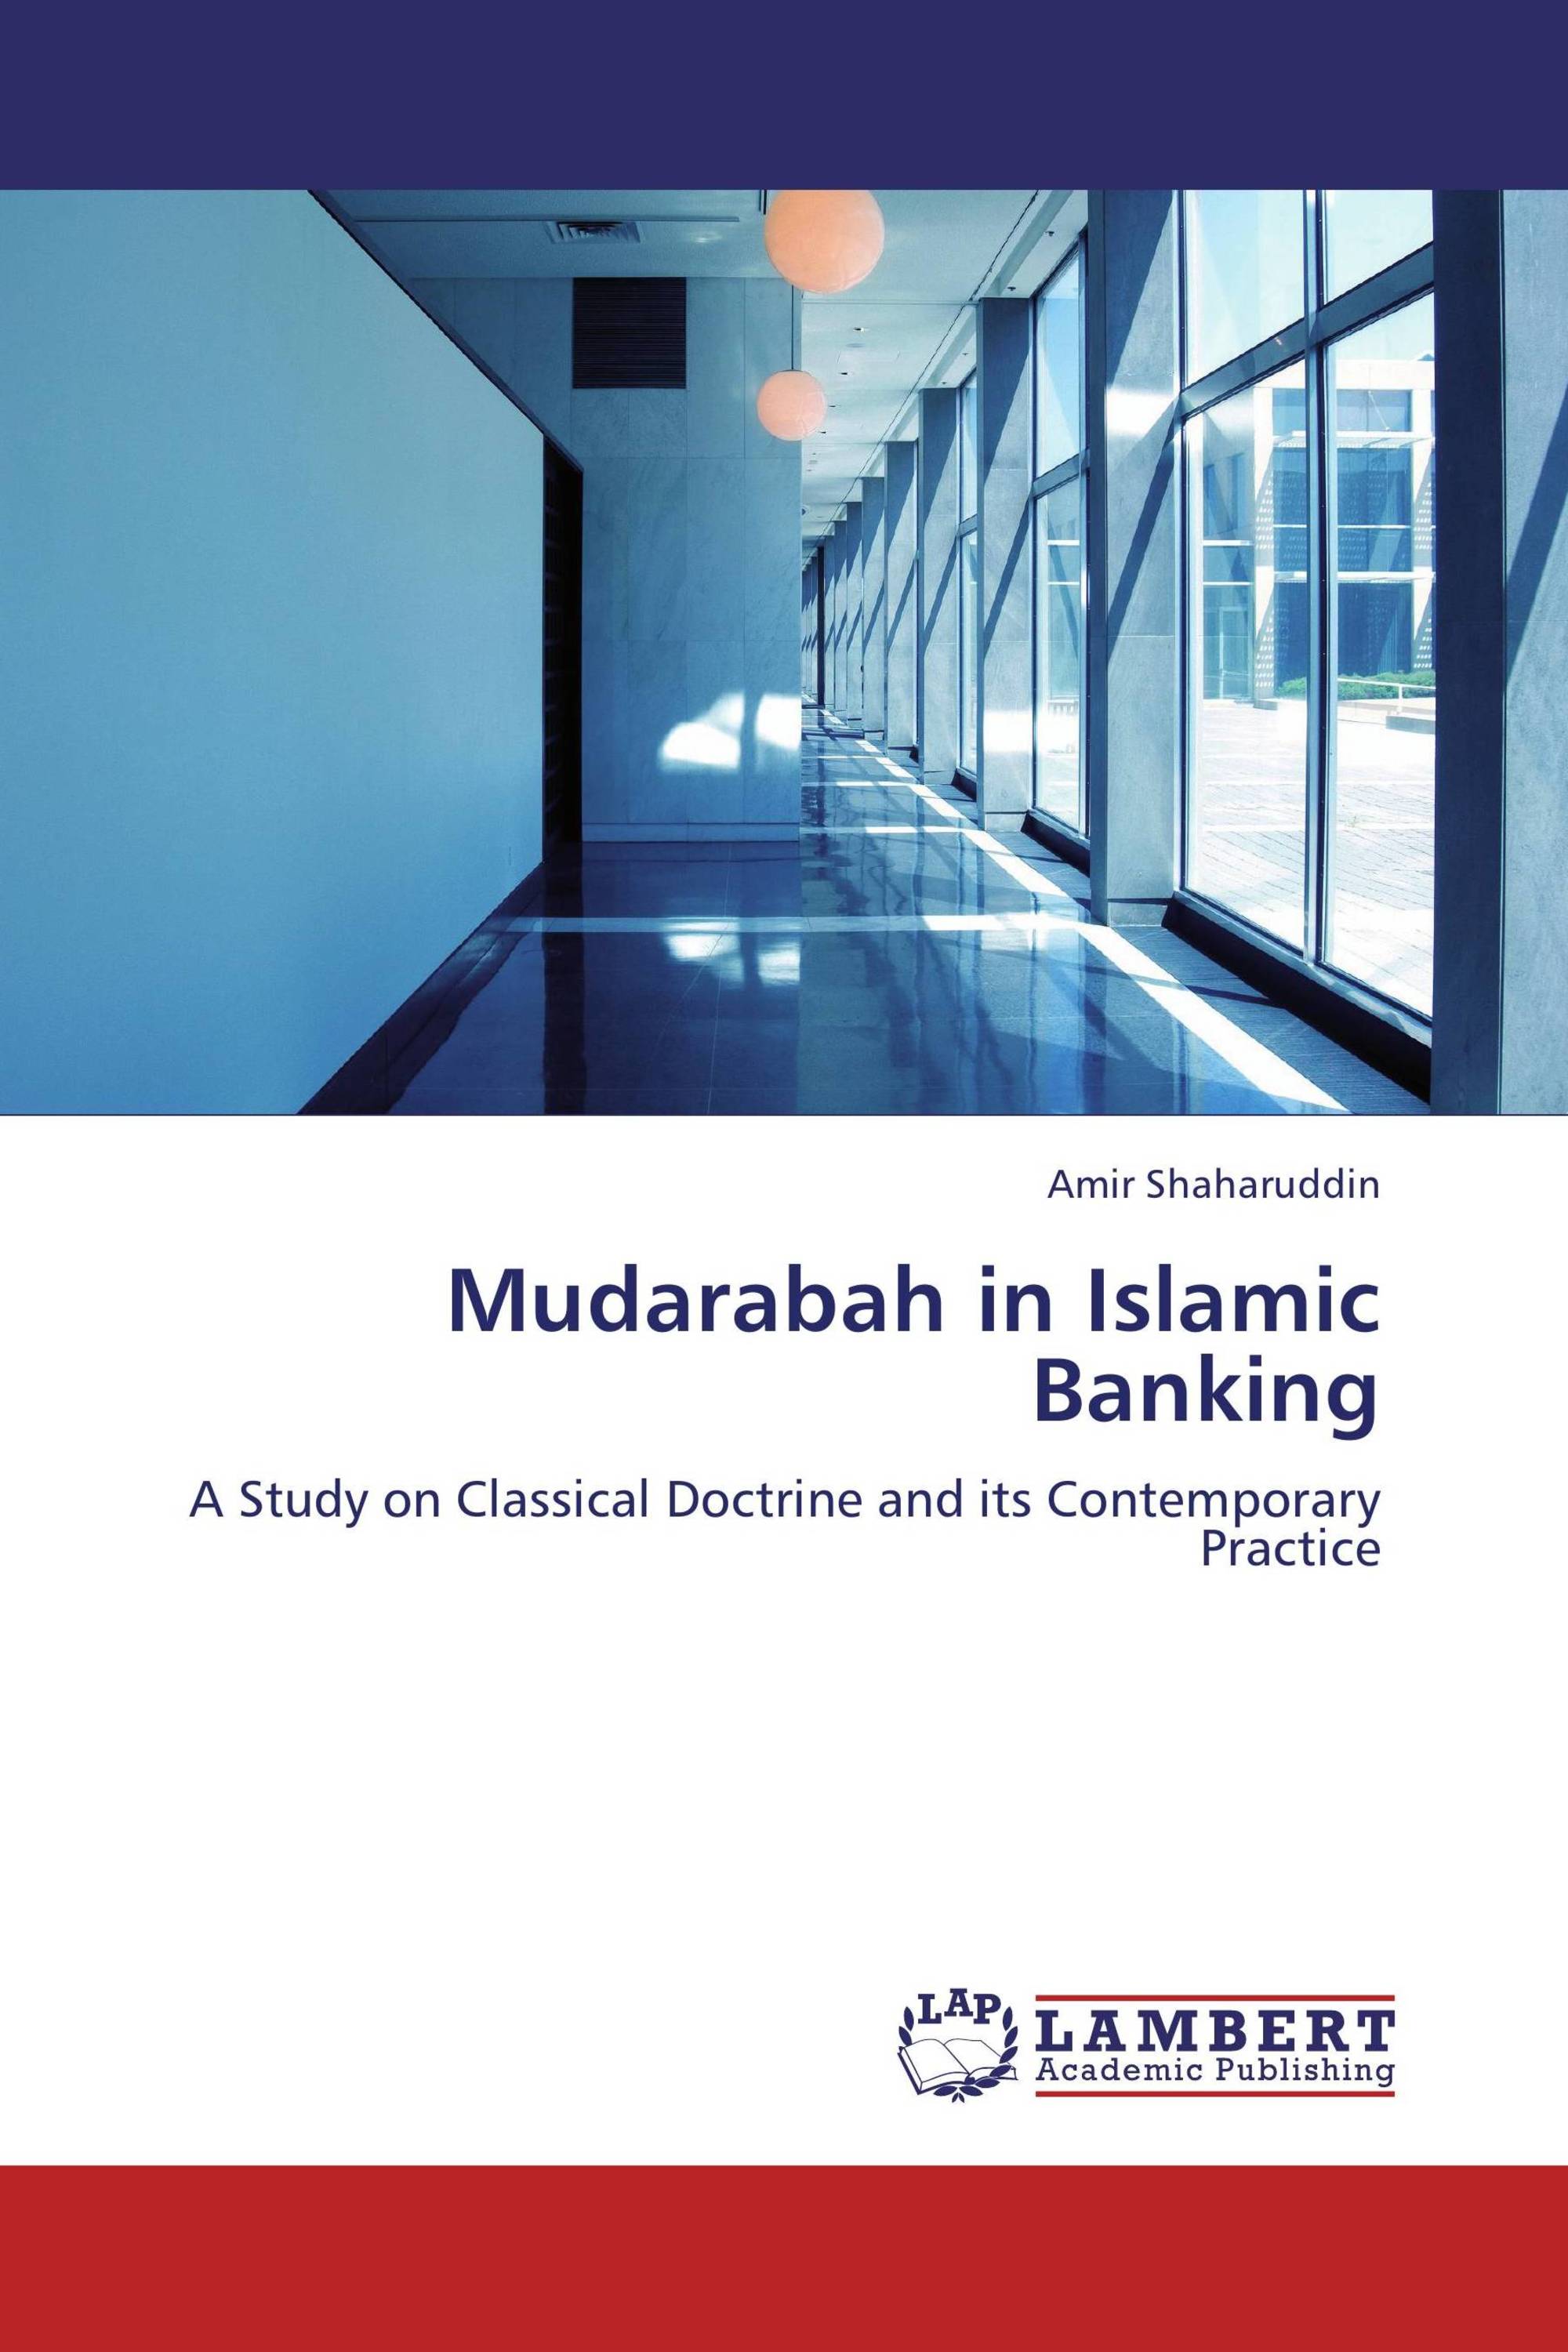 islamic banking thesis